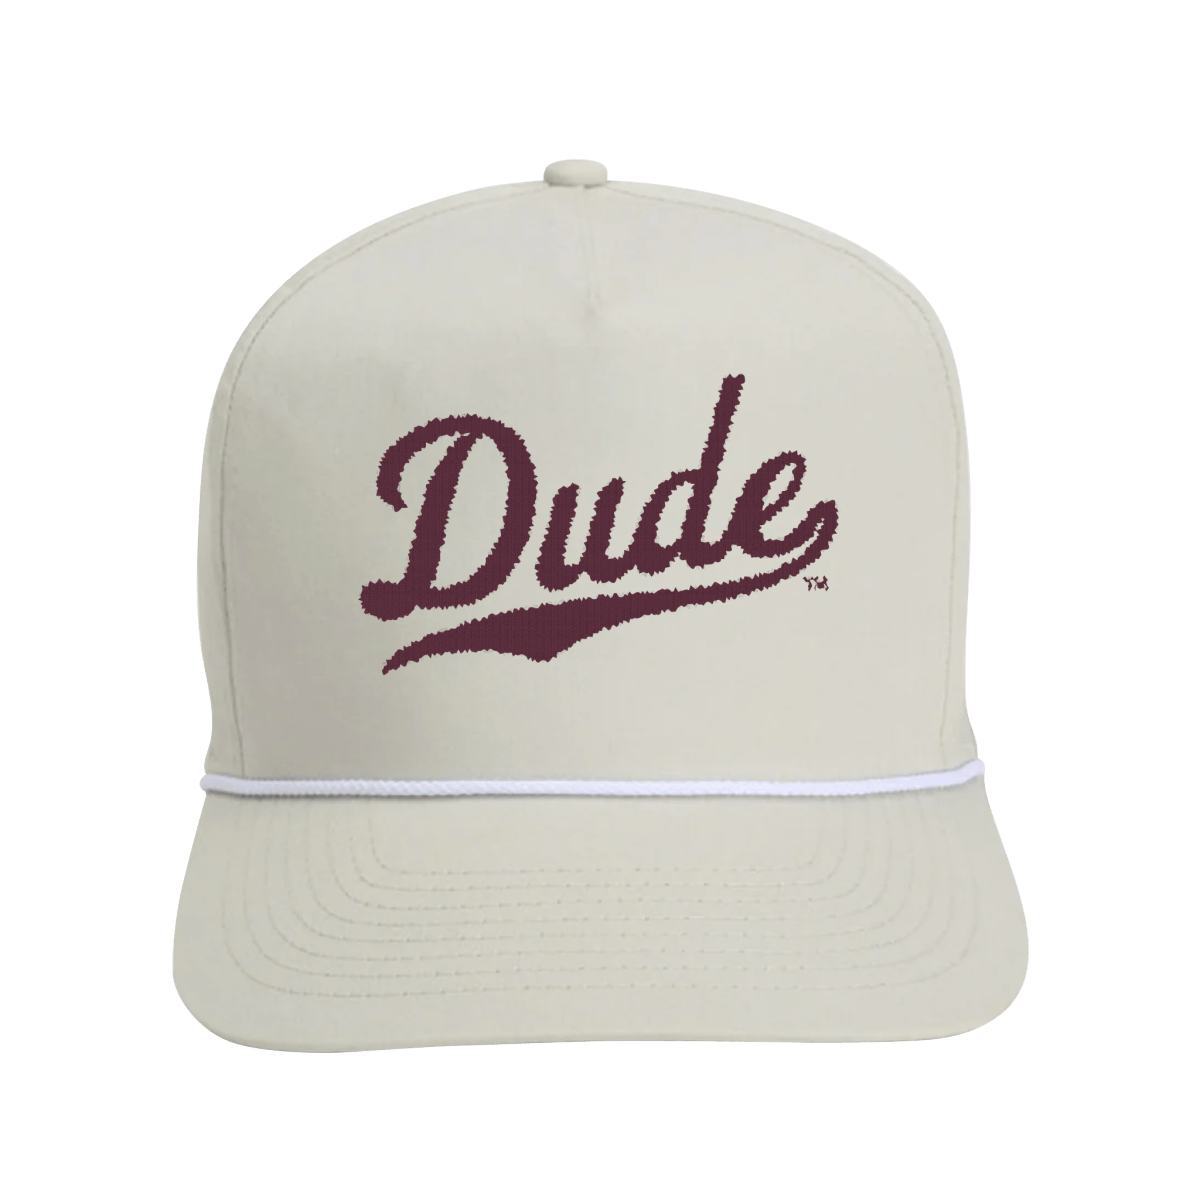 MSU The Dude Script Hat - Shop B-Unlimited